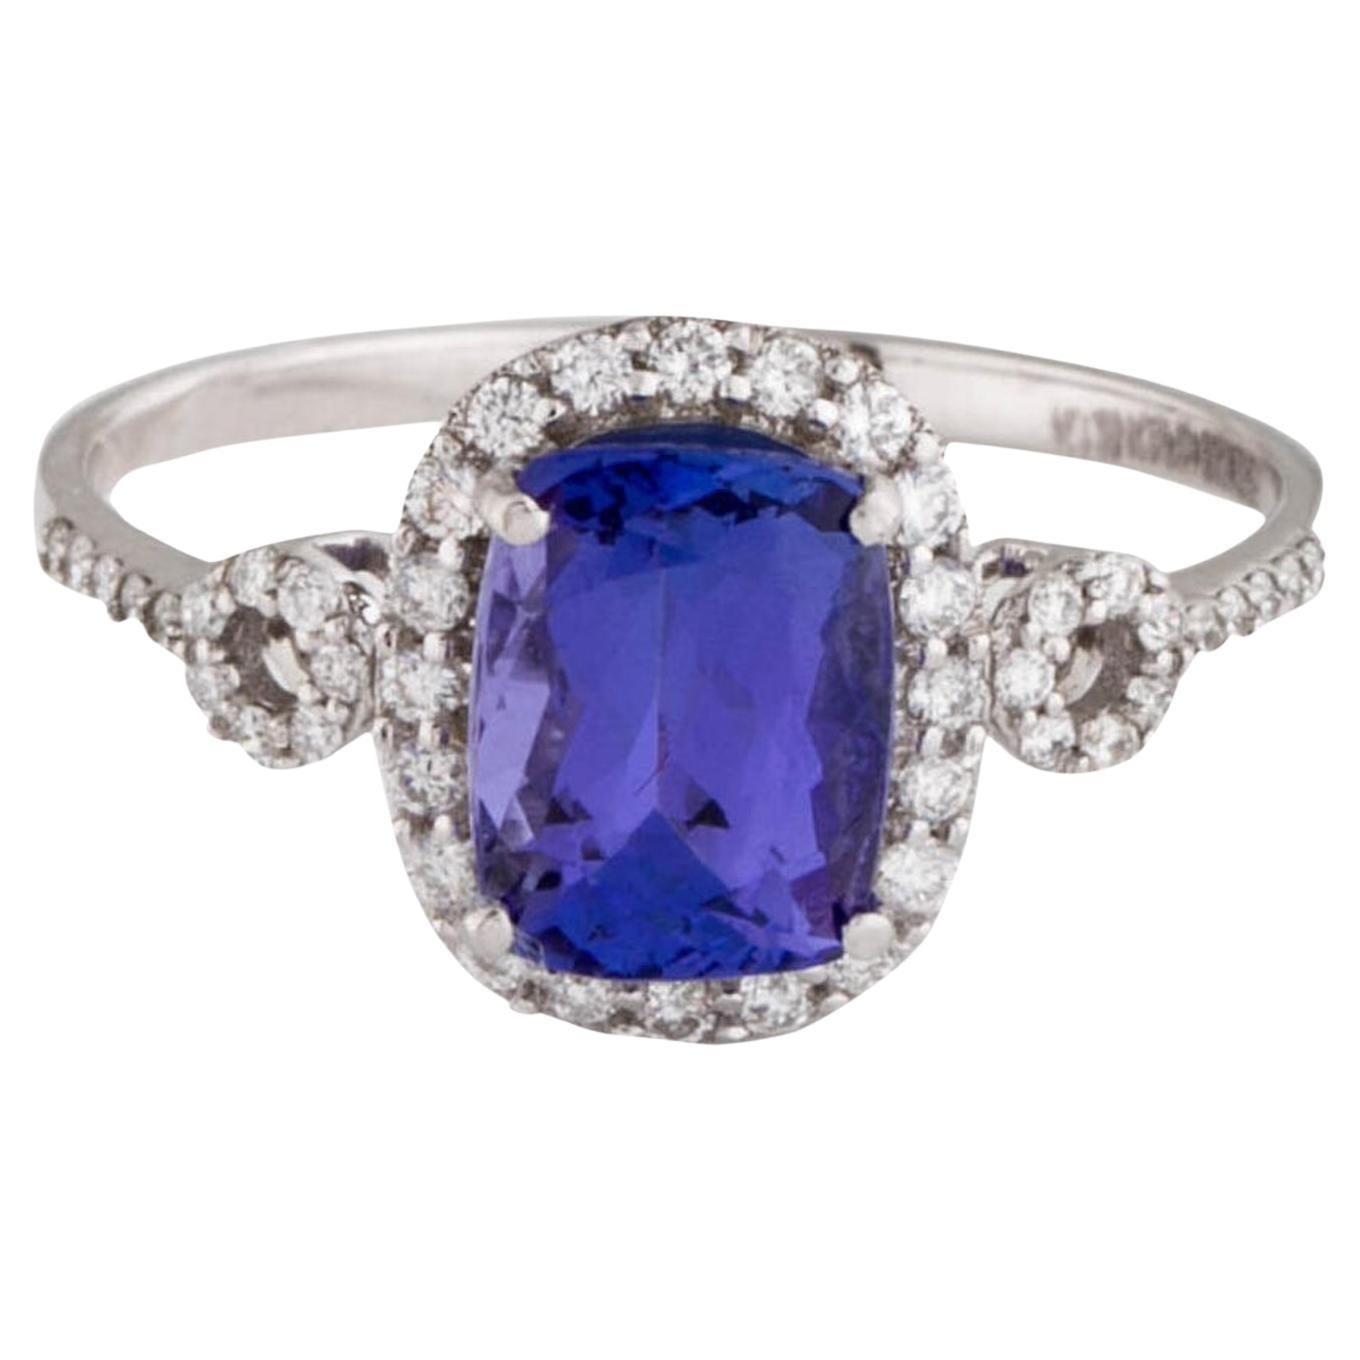 Stunning 14K Tanzanite & Diamond Cocktail Ring 1.70ctw, Size 7 - Elegant Jewelry